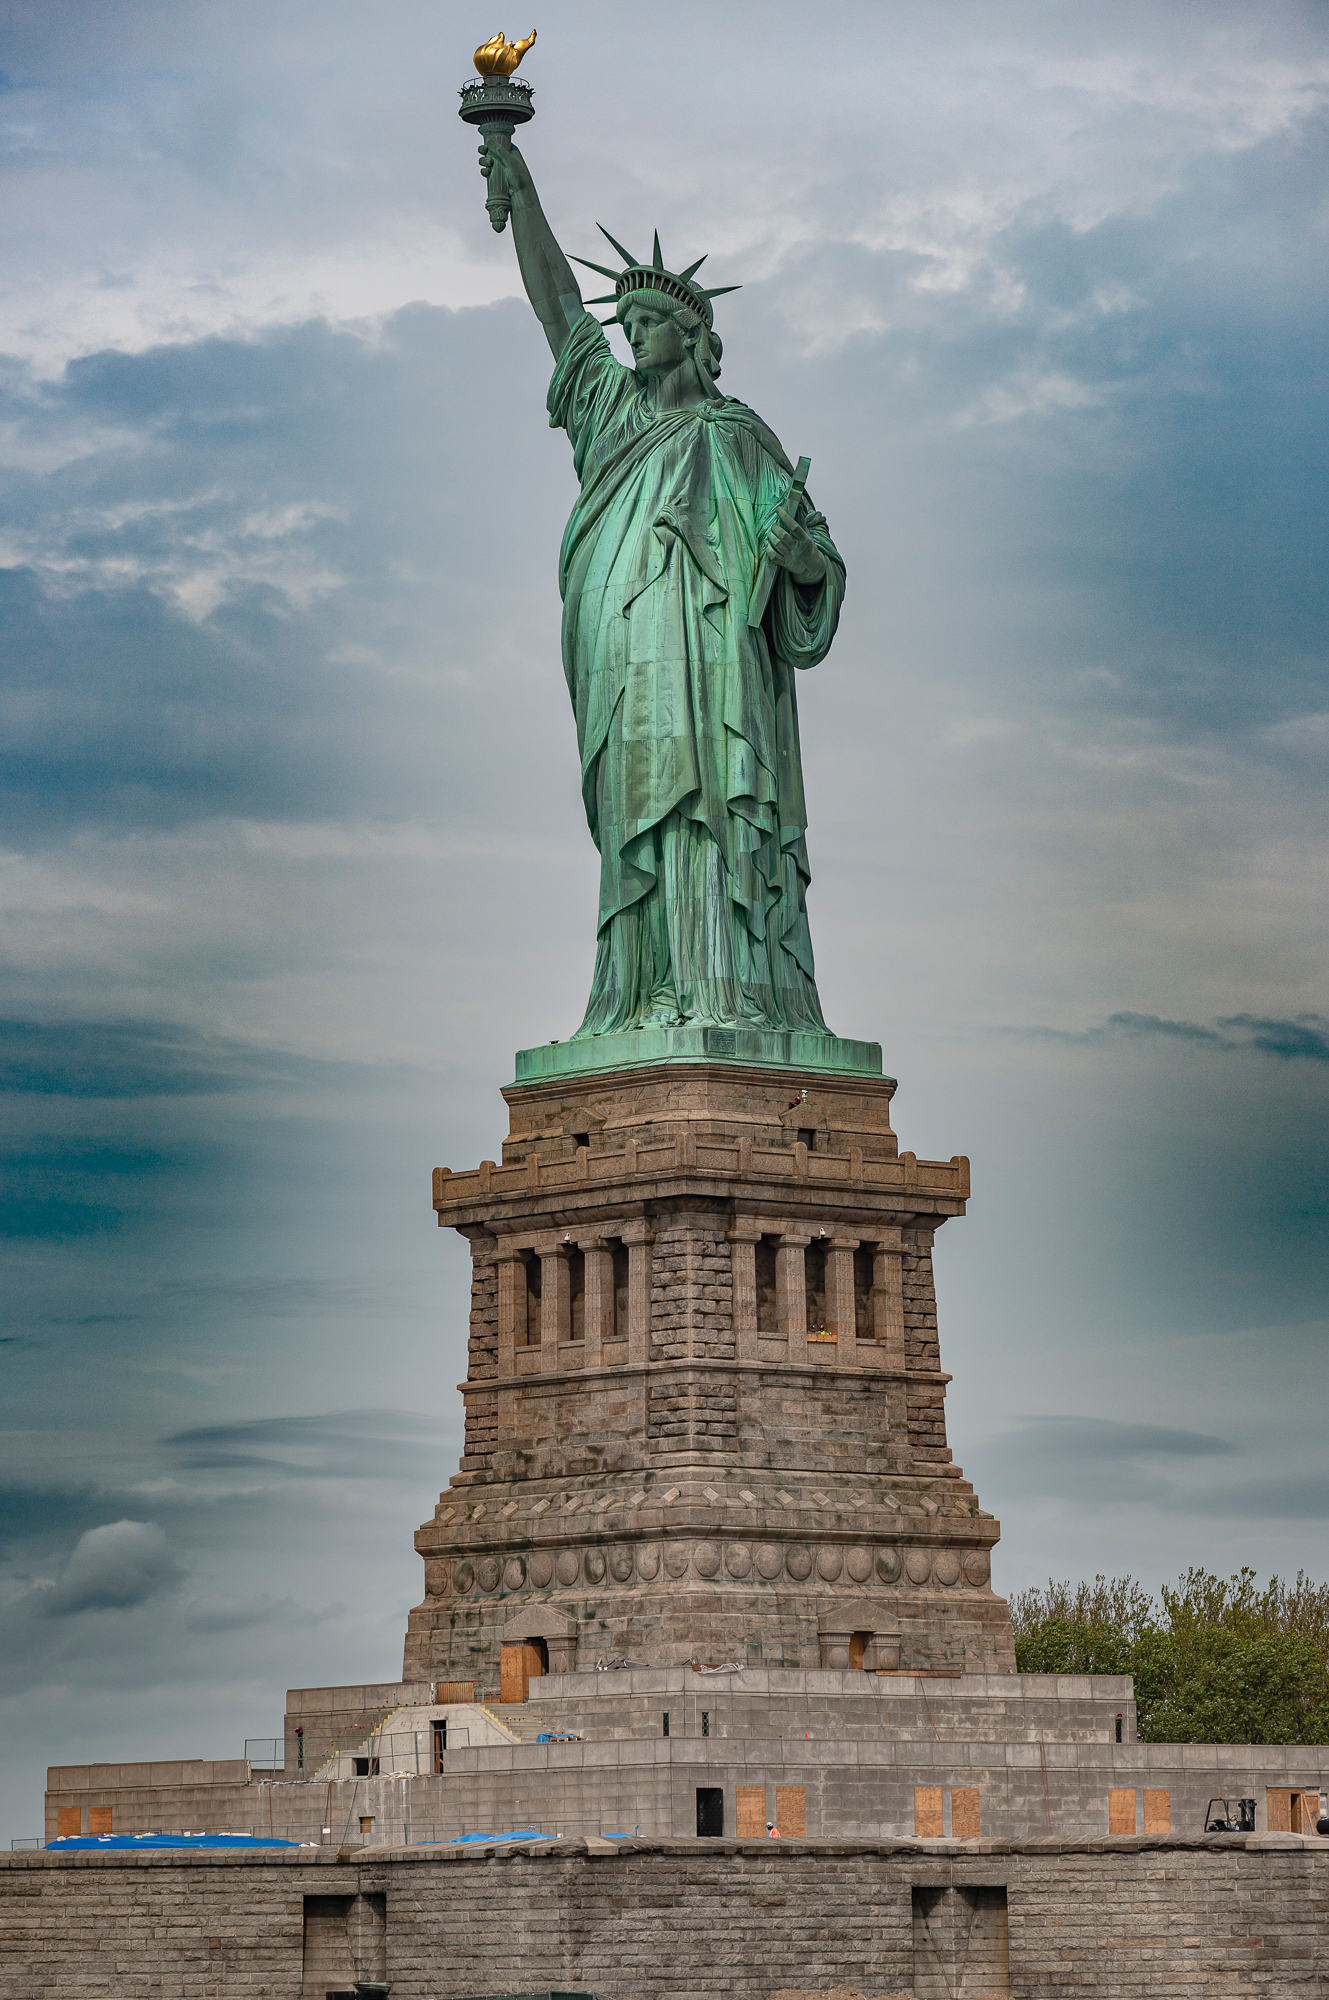 Statue of Liberty on Bedloe’s Island, dedicated in 1886